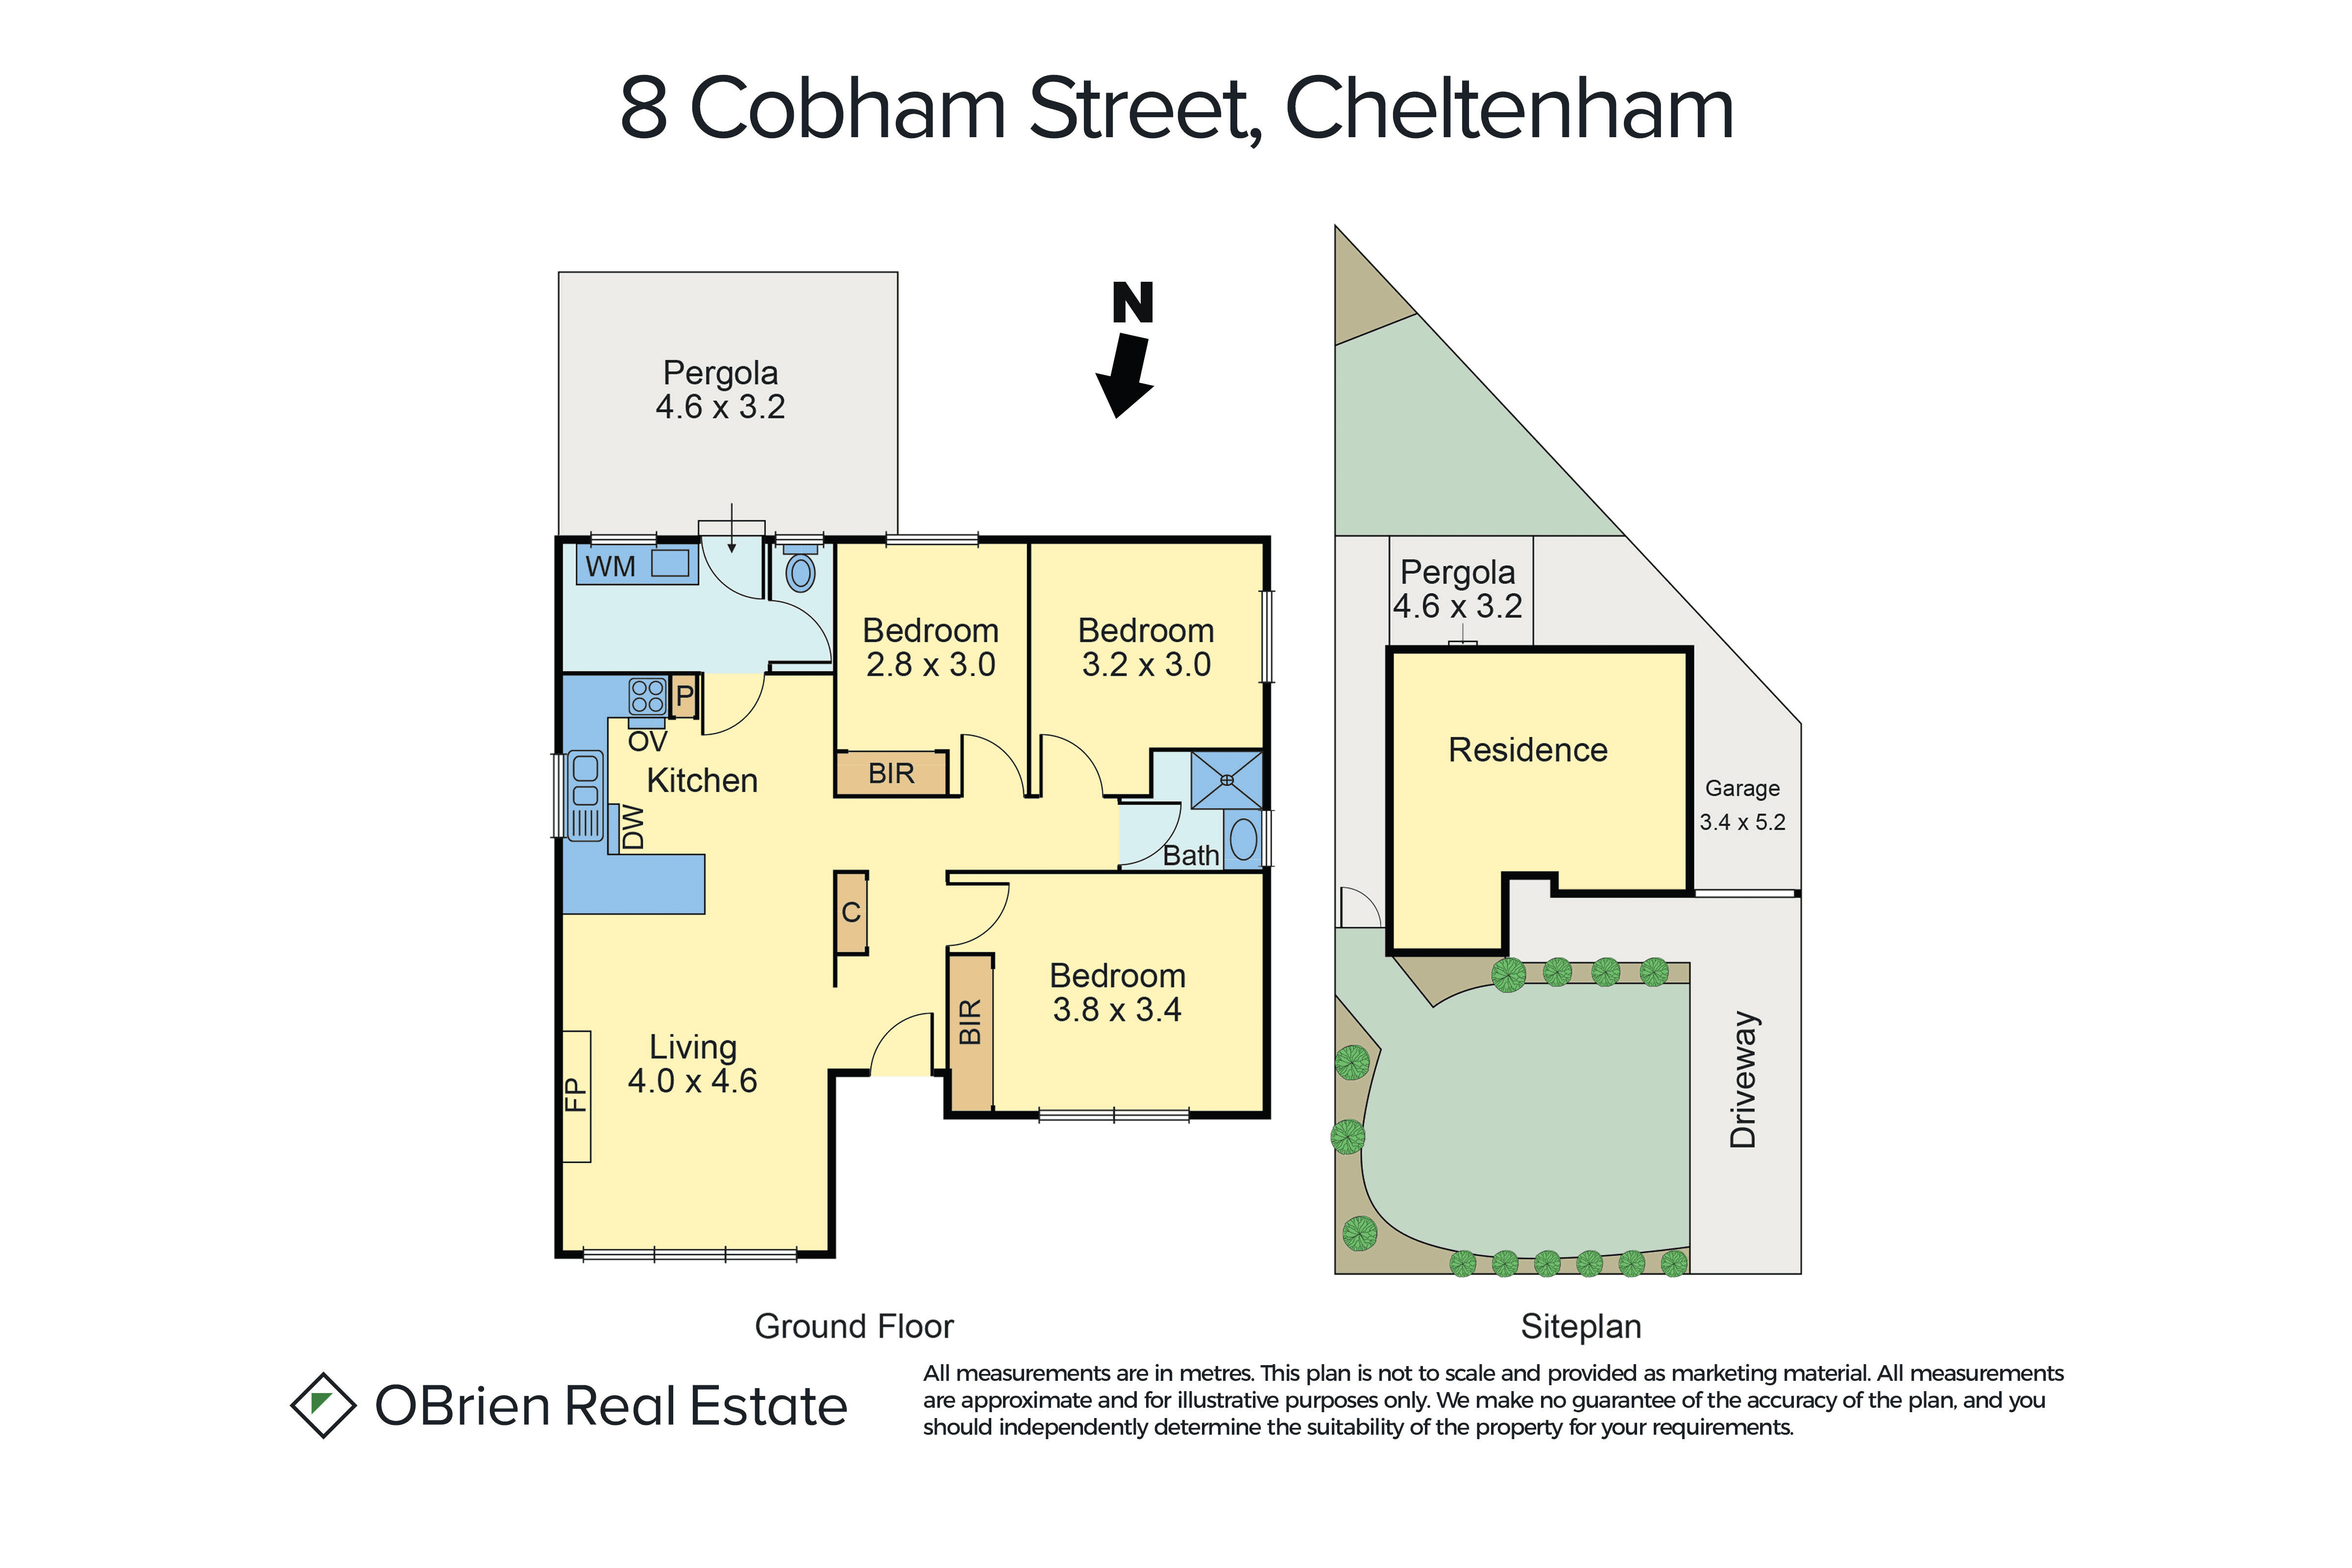 8 Cobham Street, Cheltenham, VIC 3192